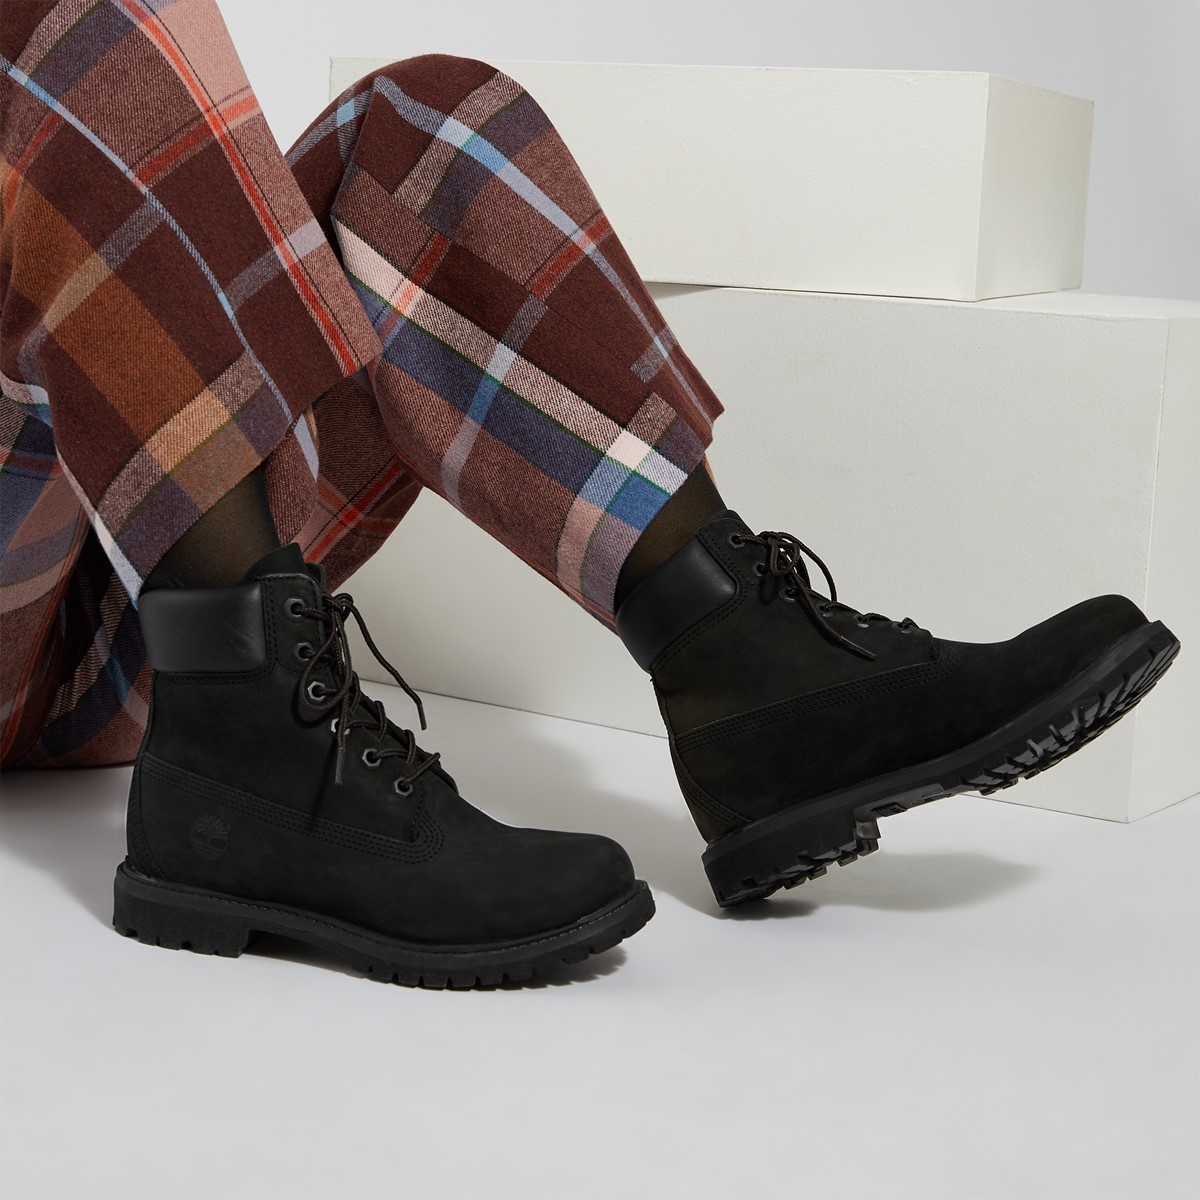 timberland women's black waterproof boots